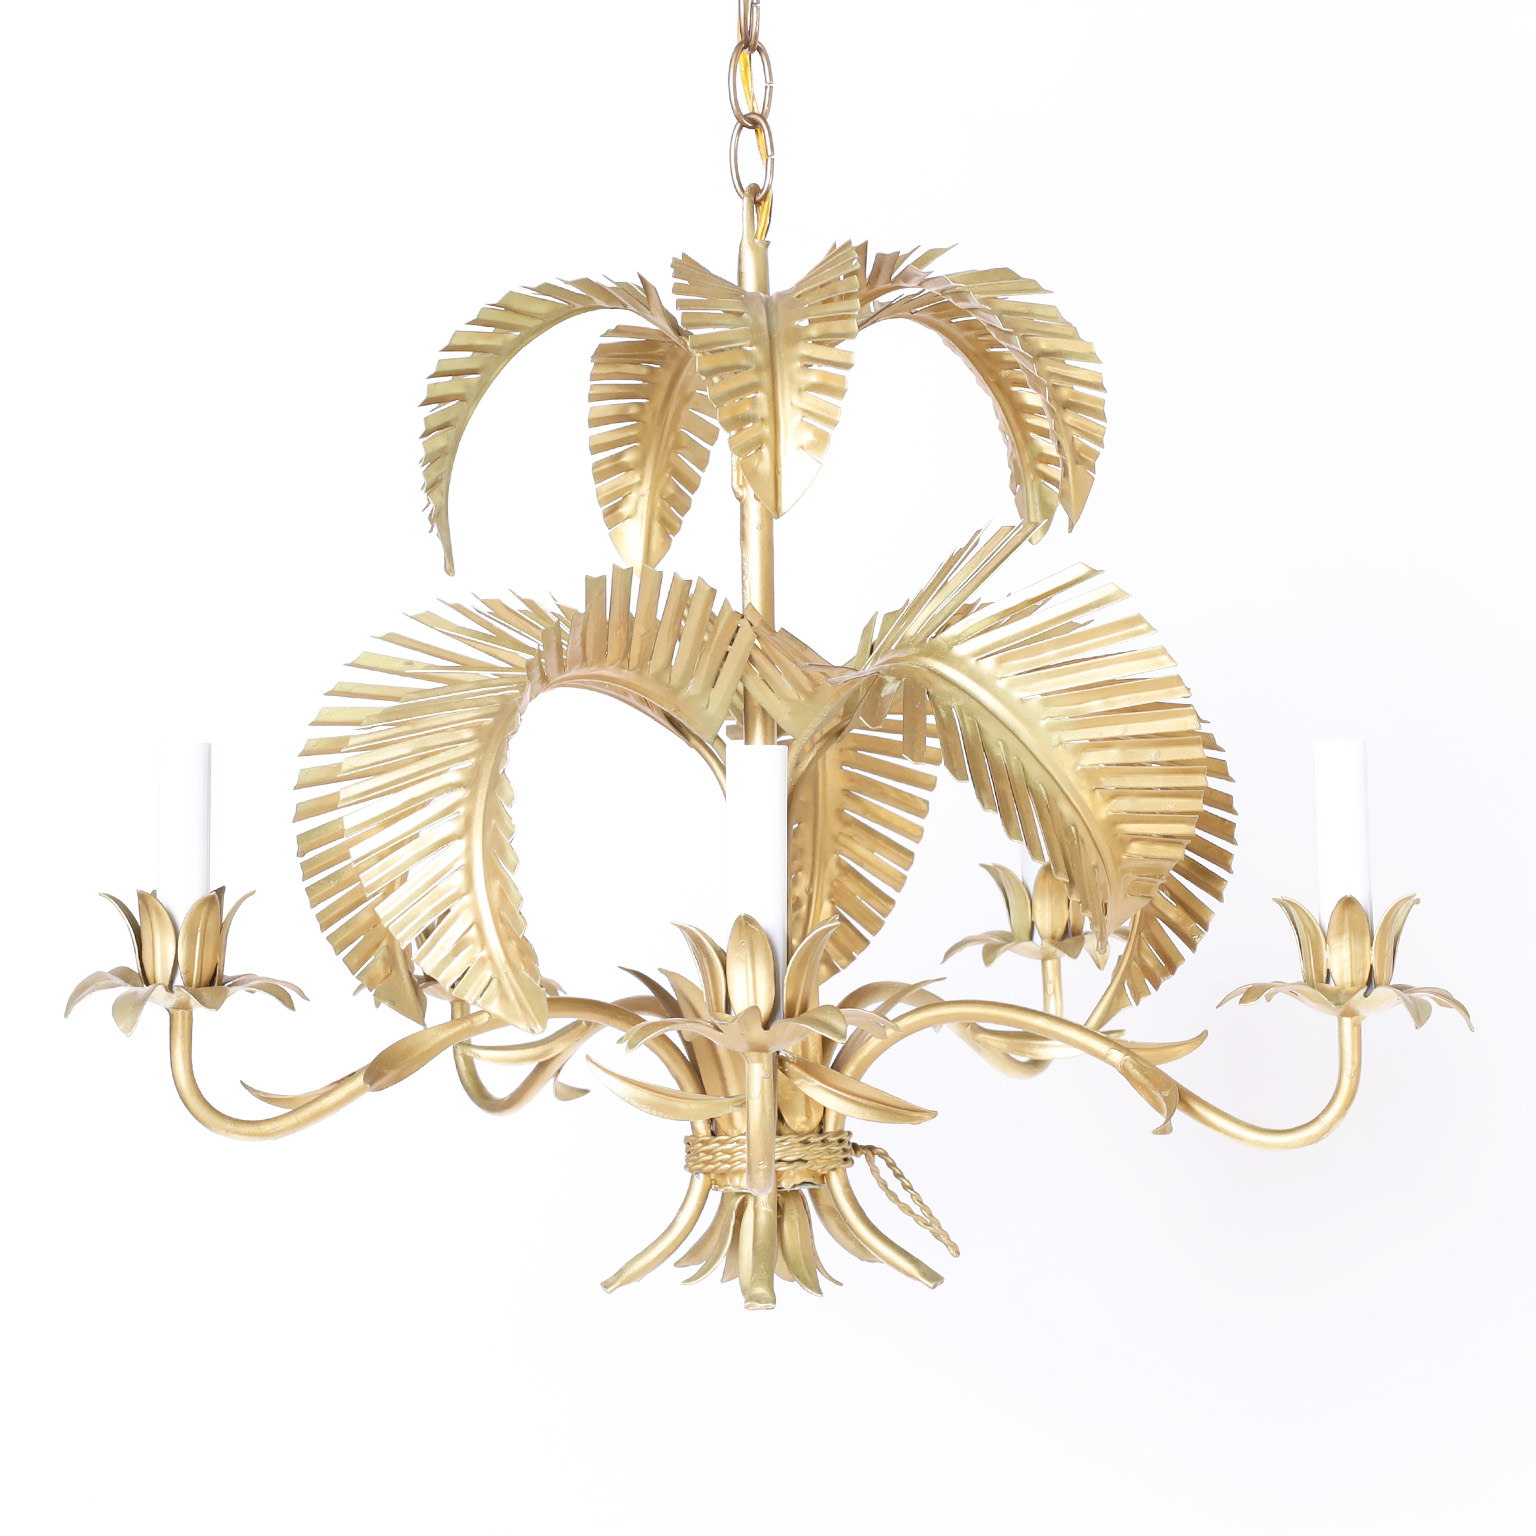 Vintage Italian Palm Tree Chandelier or Light Fixture